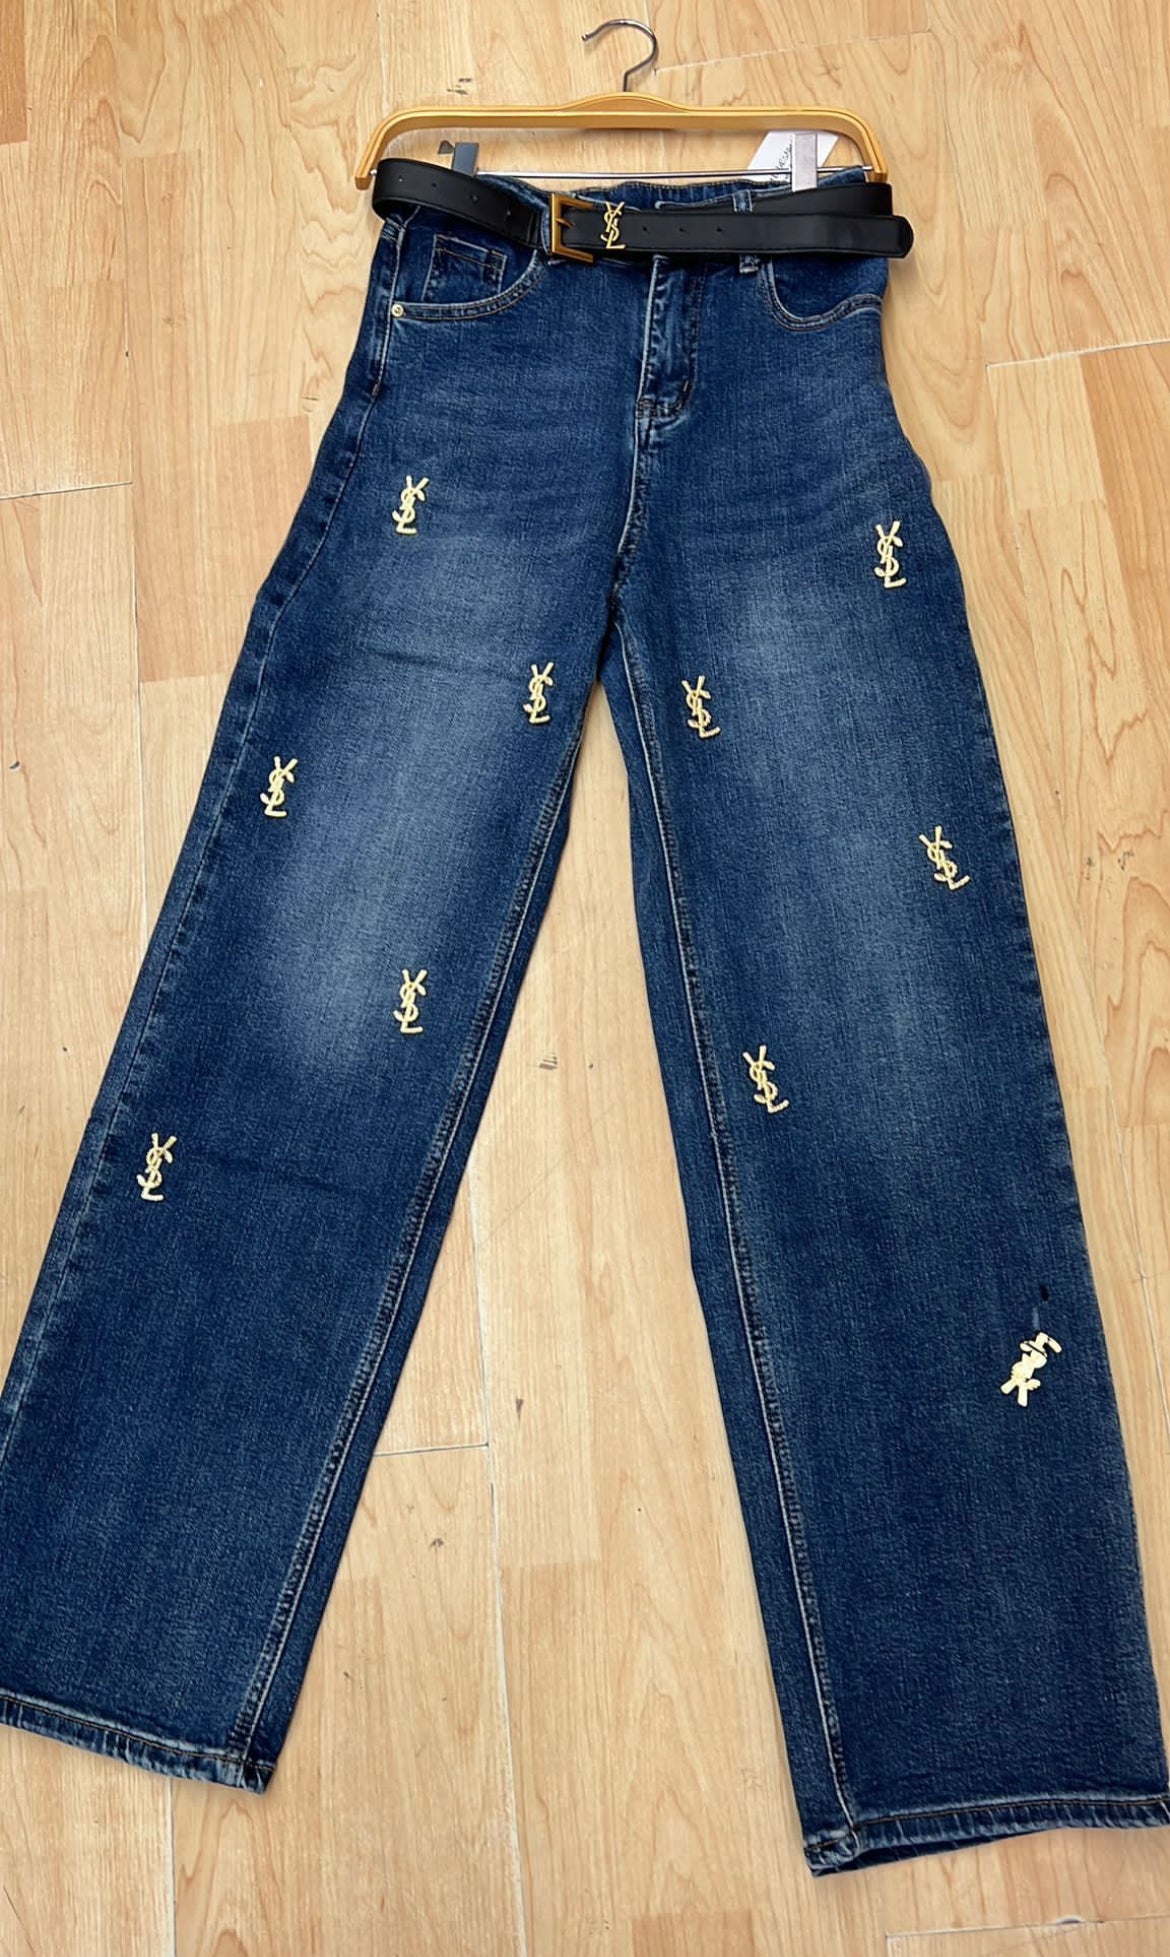 Laurent Inspired Jeans